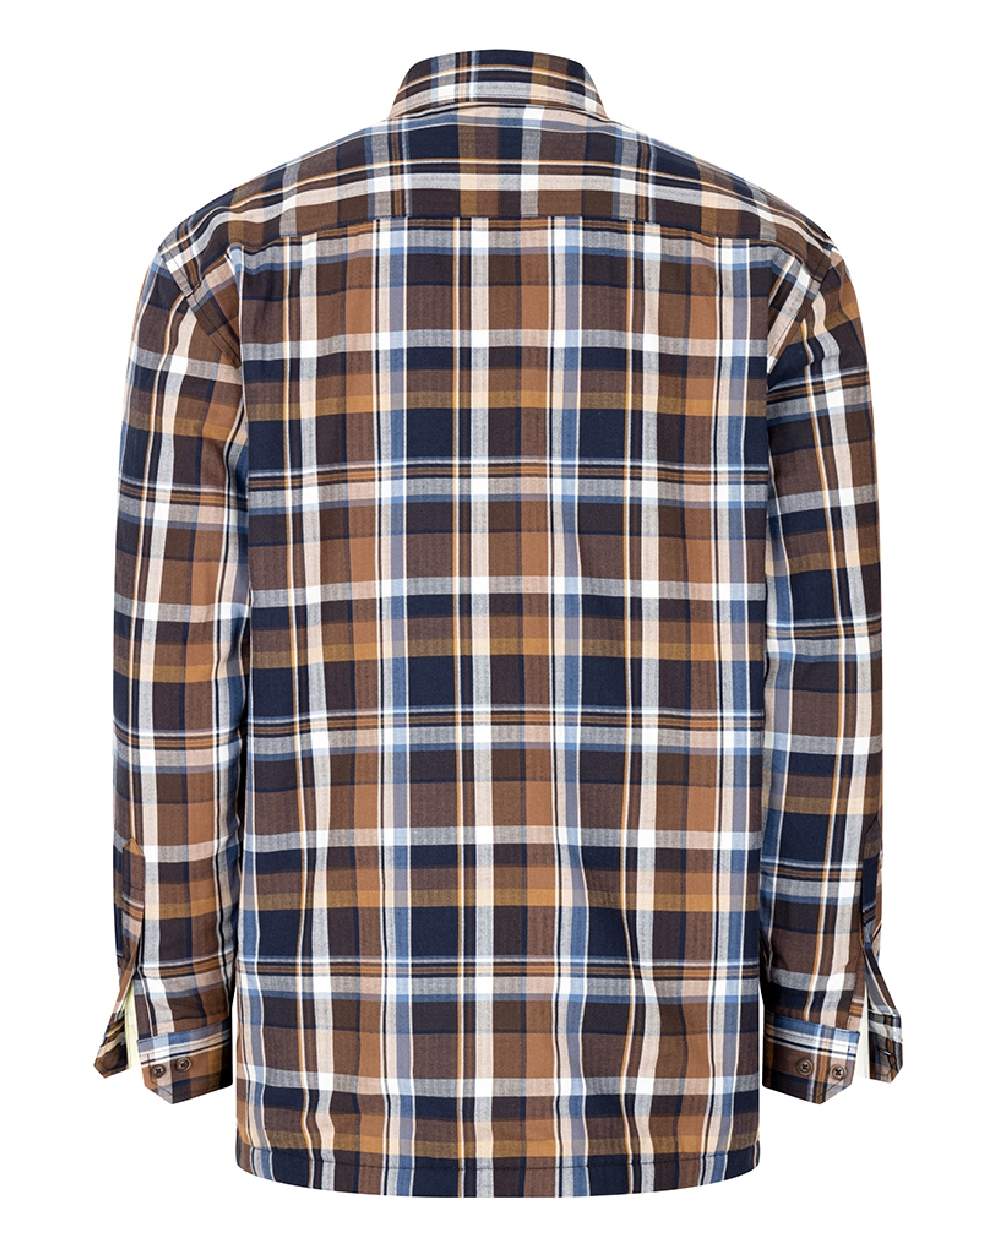 Hoggs of Fife Arran Micro Fleece Lined 100% Cotton Shirt in Navy/Brown Check 